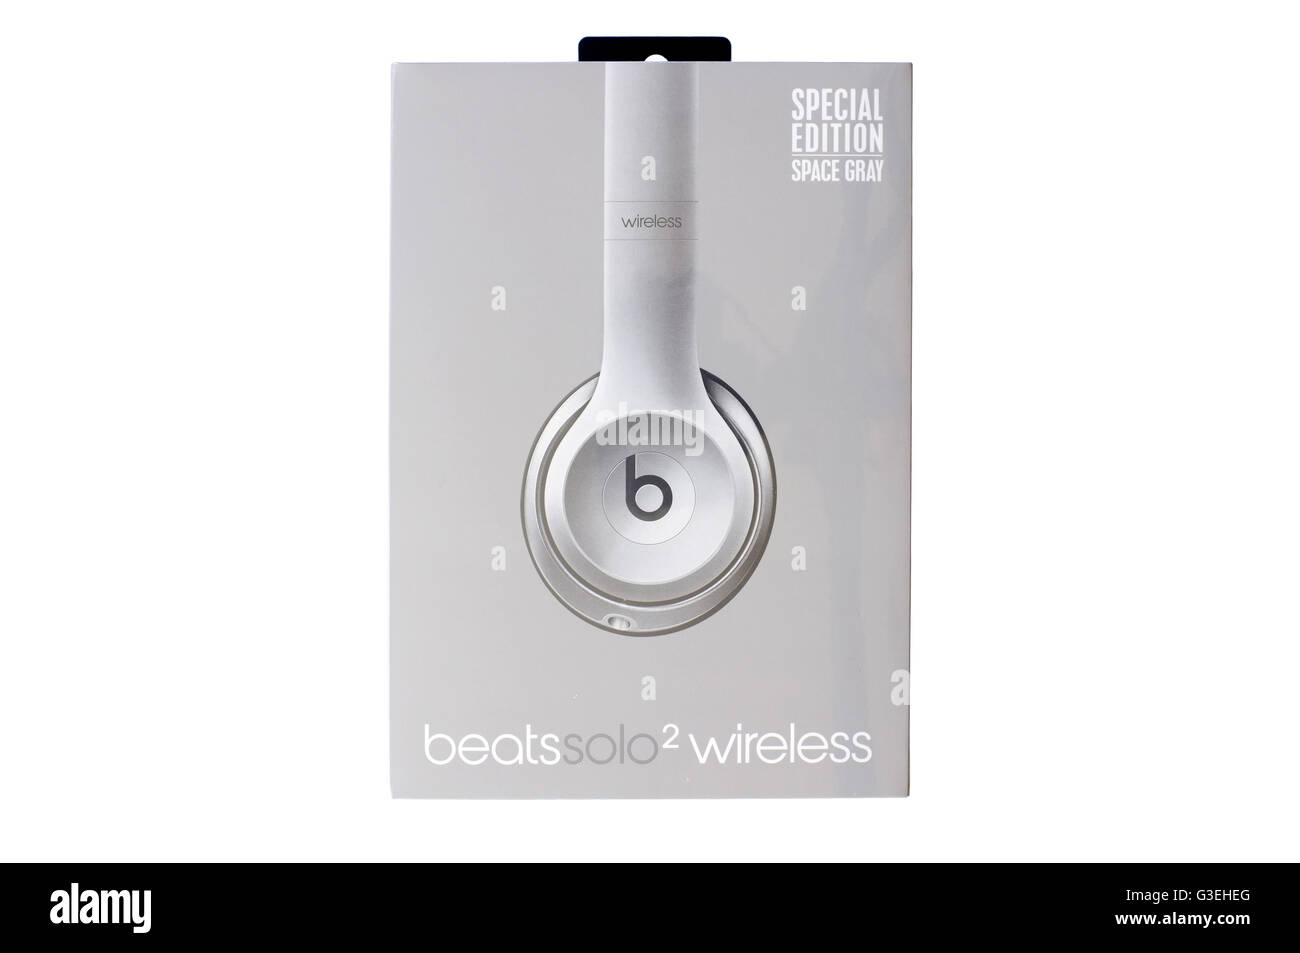 beats solo 2 wireless box